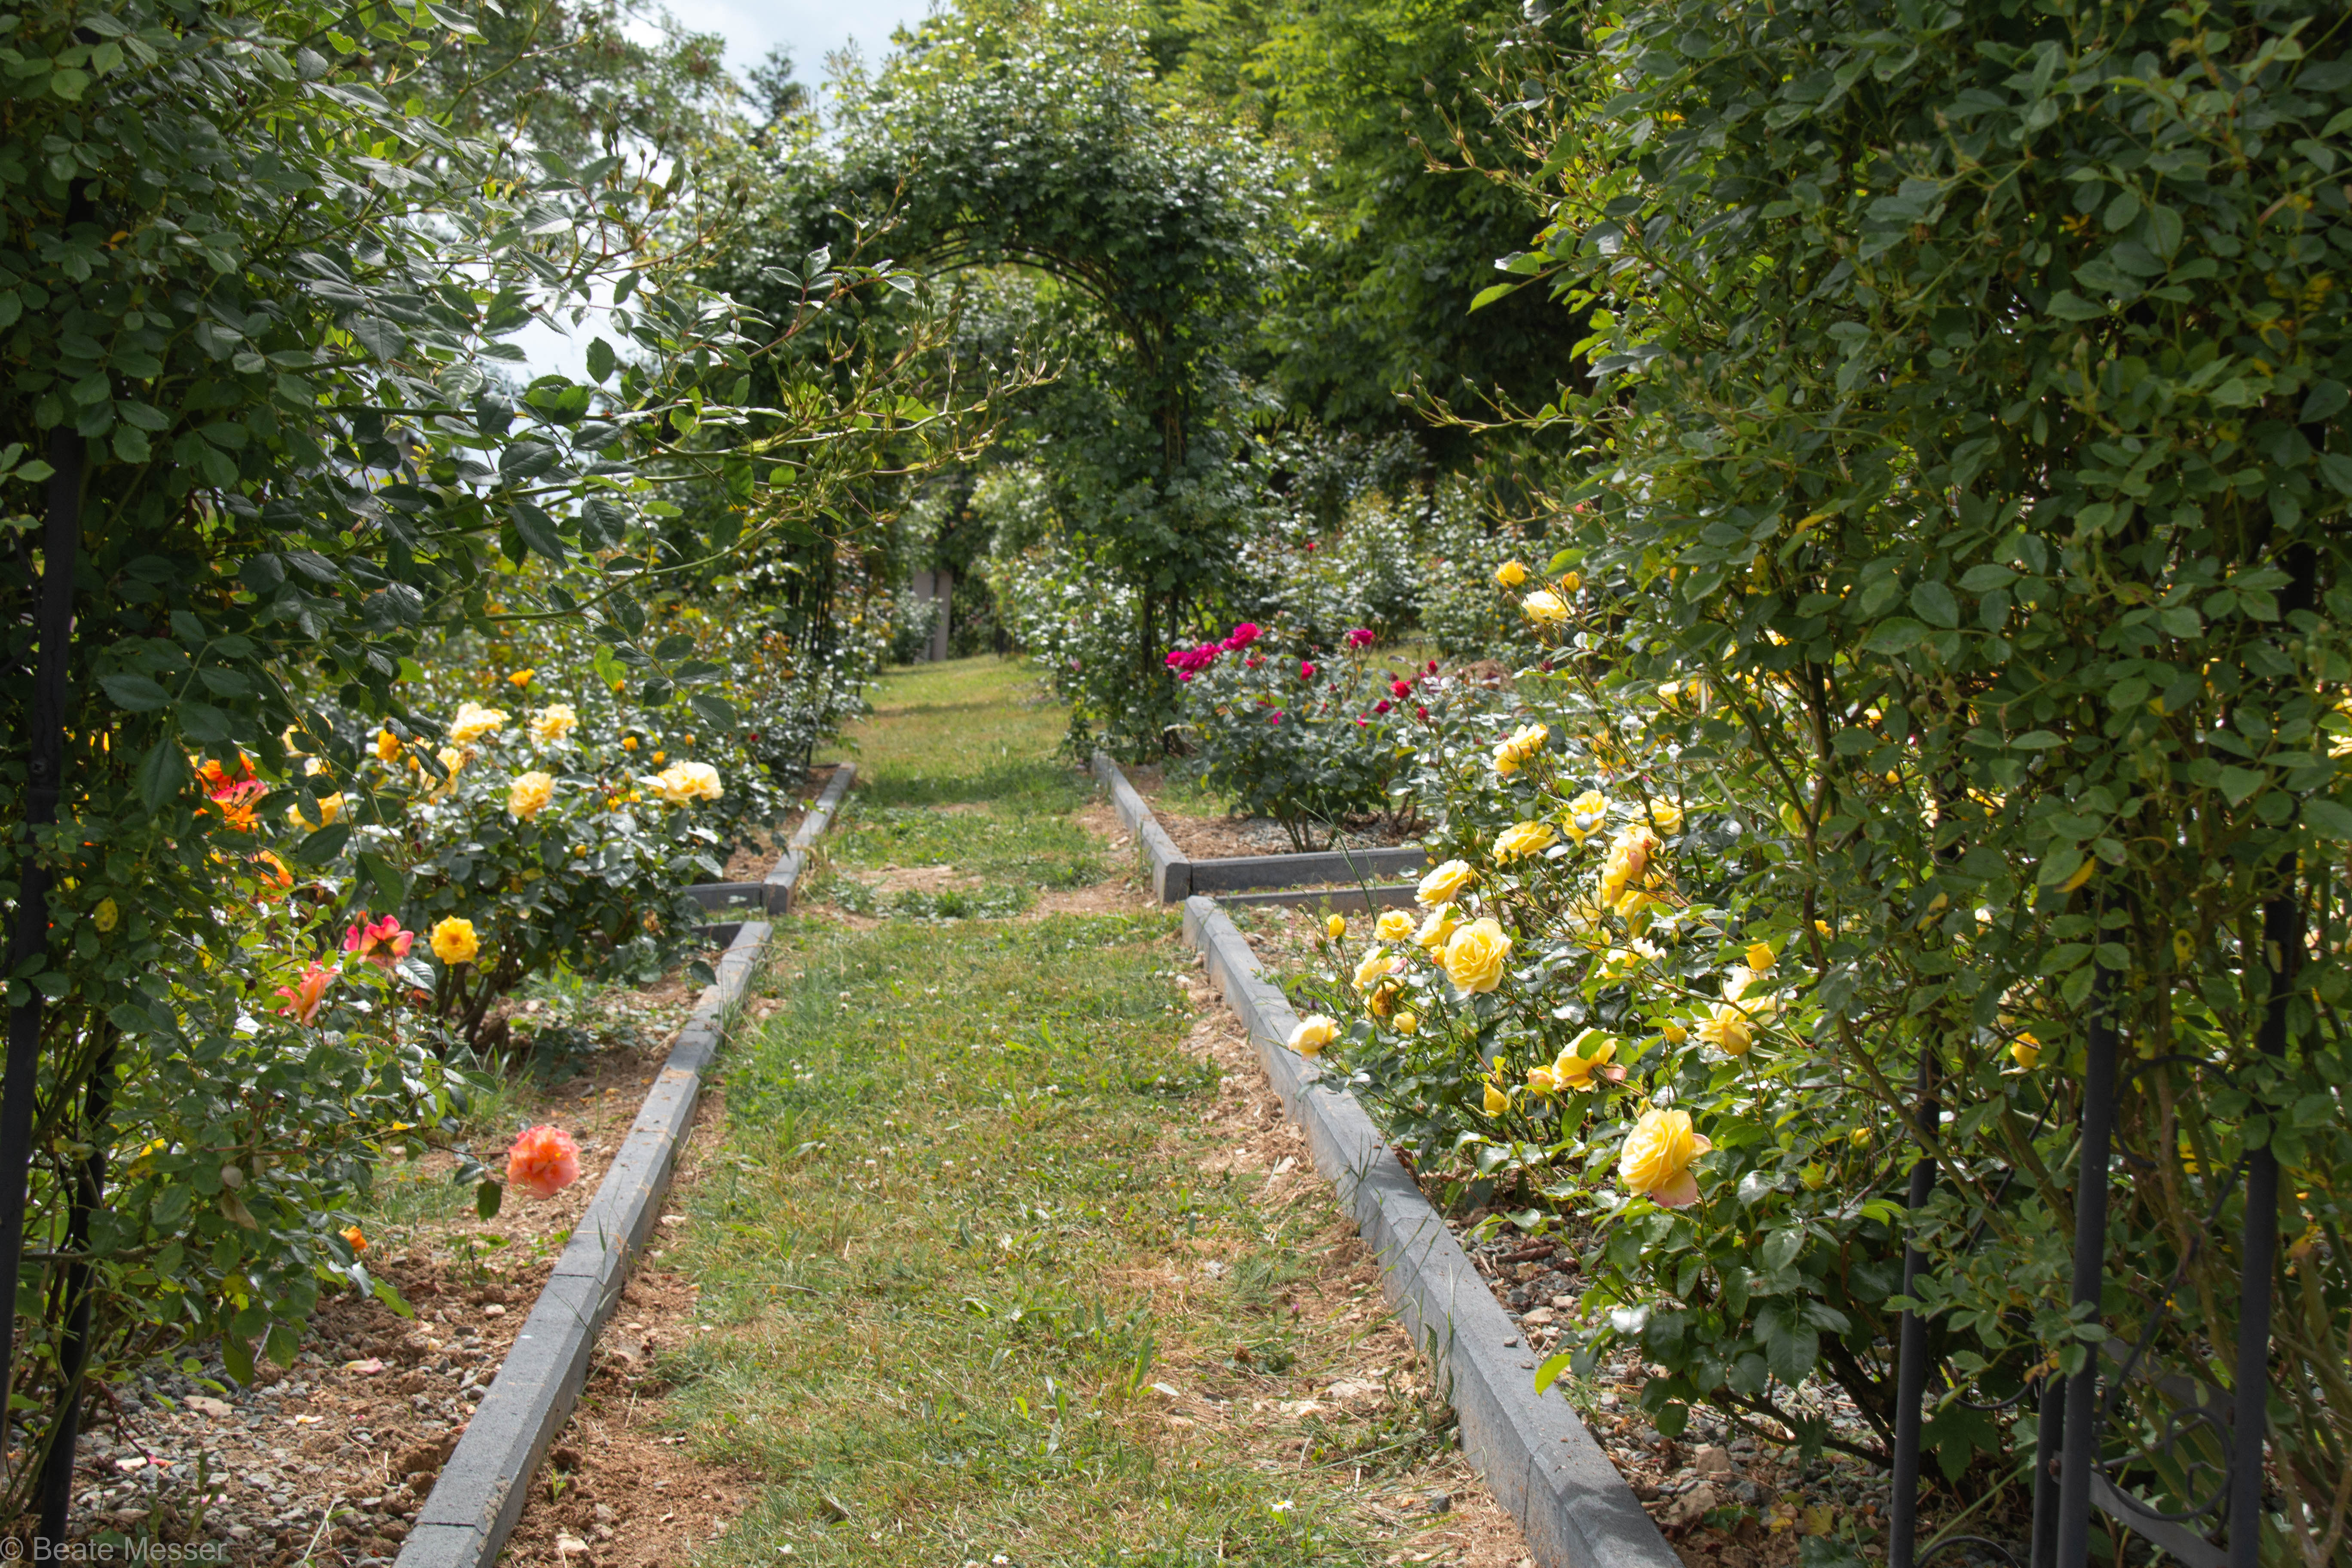 Public rose garden